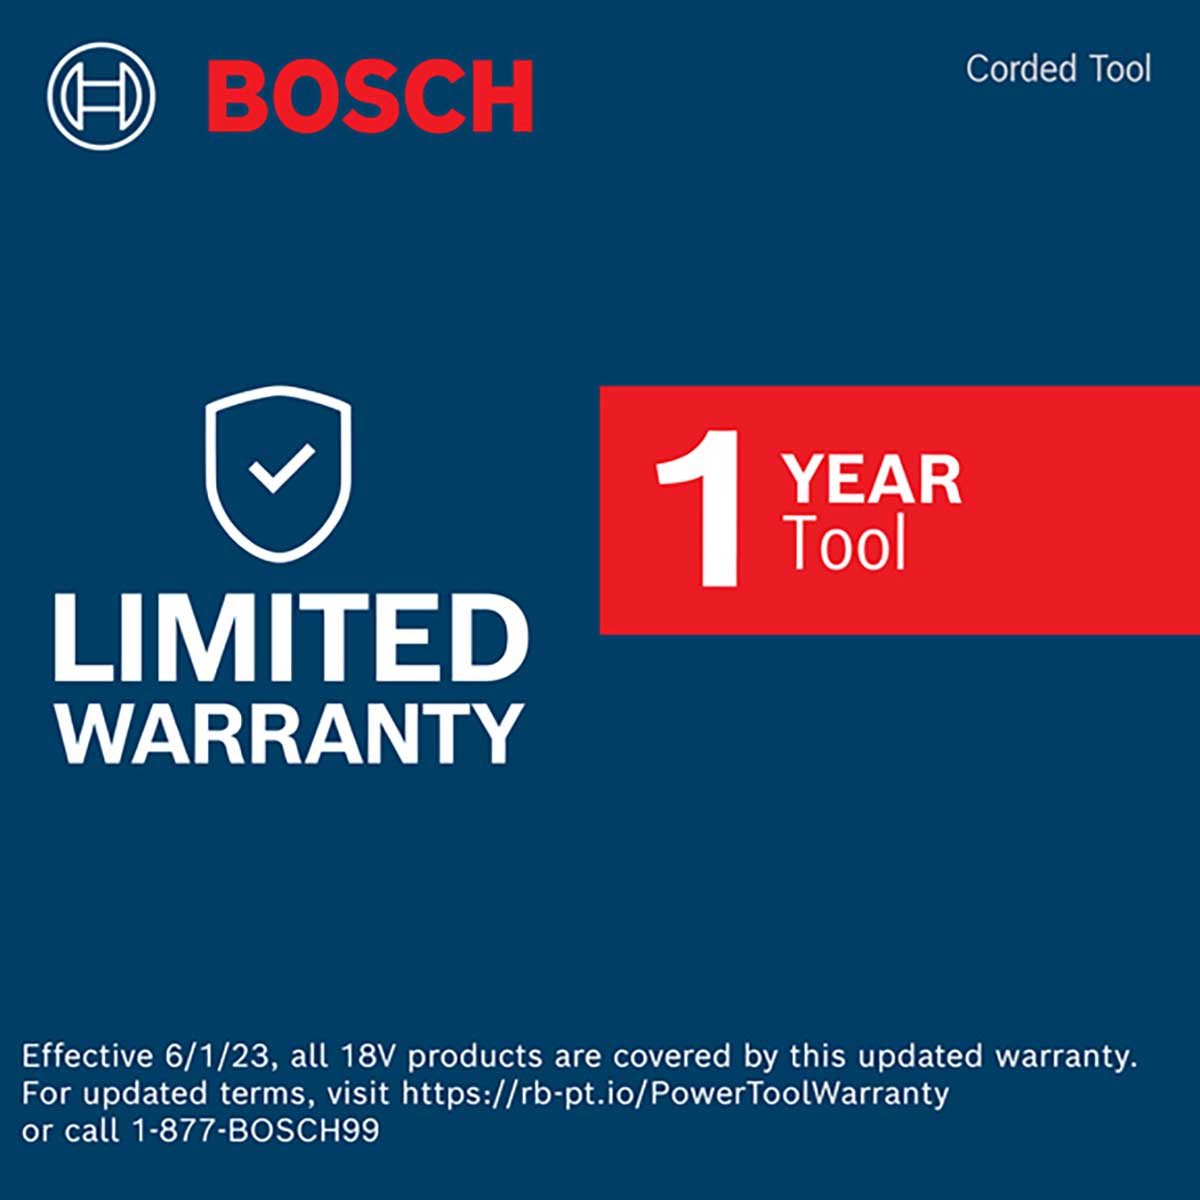 Bosch GTR55-85 Drywall Sander